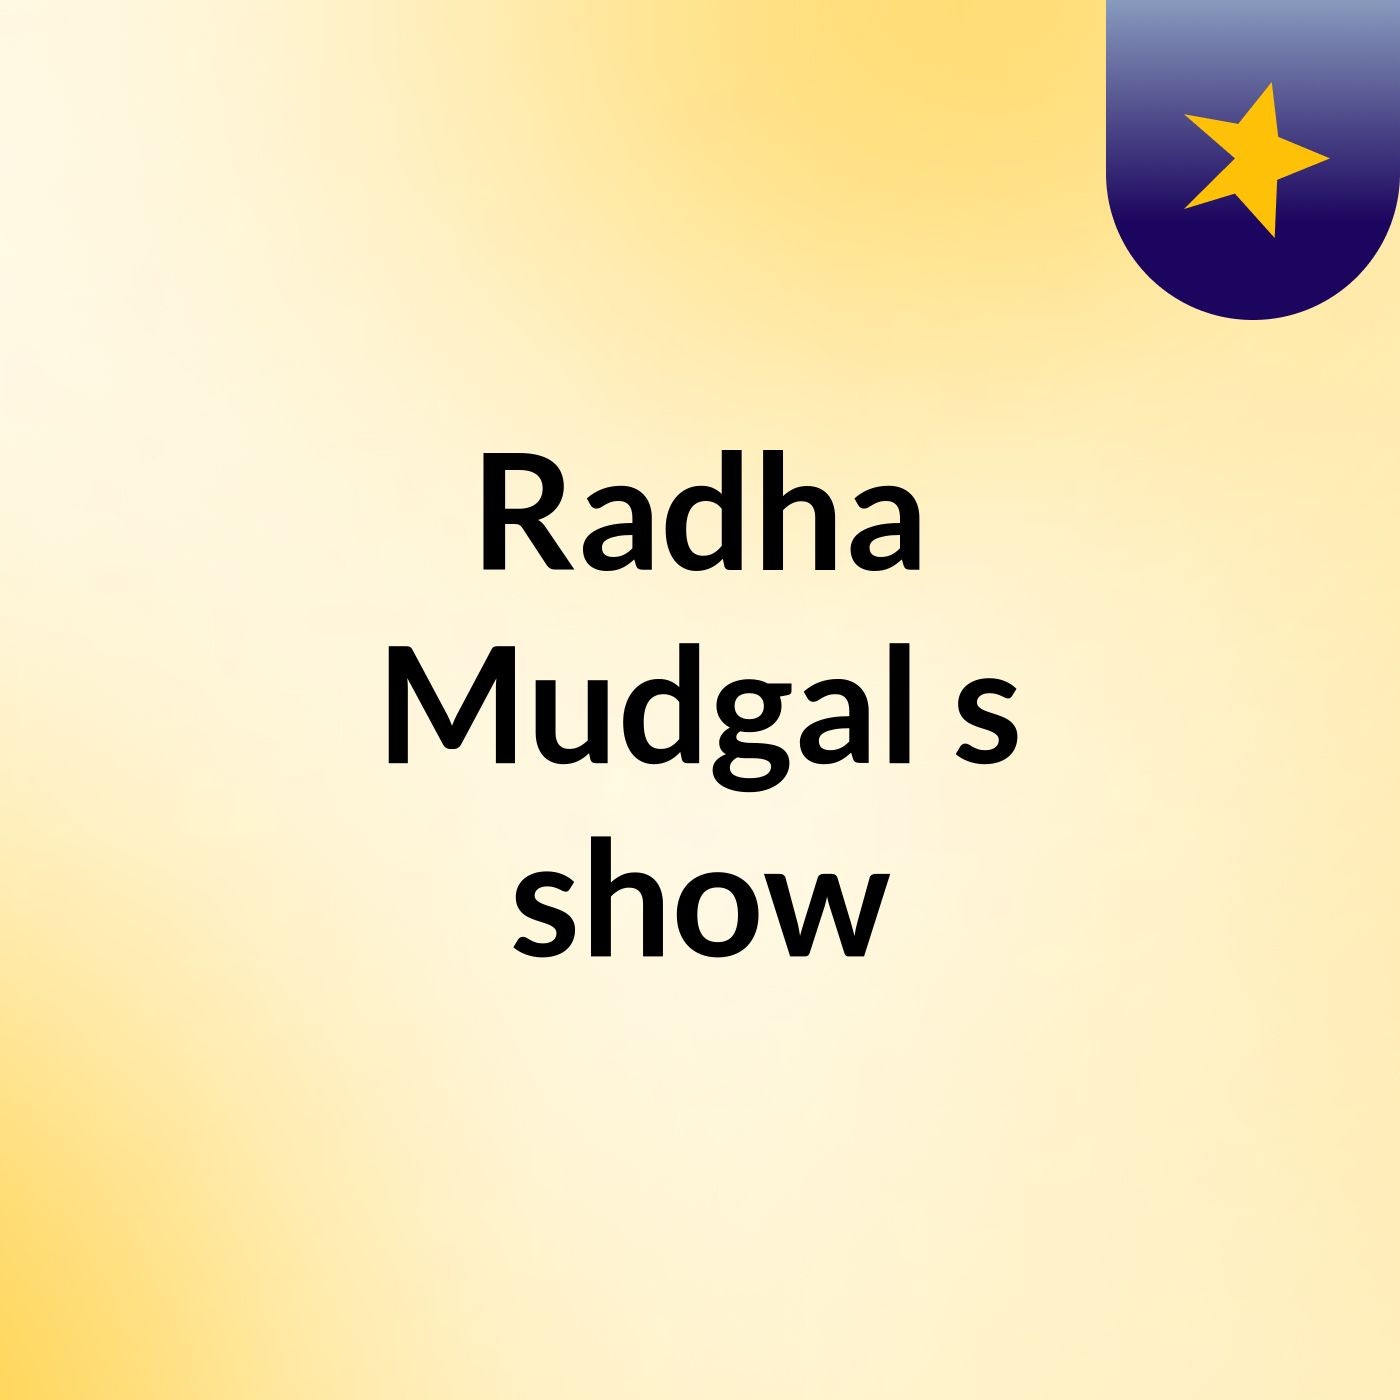 Radha Mudgal's show